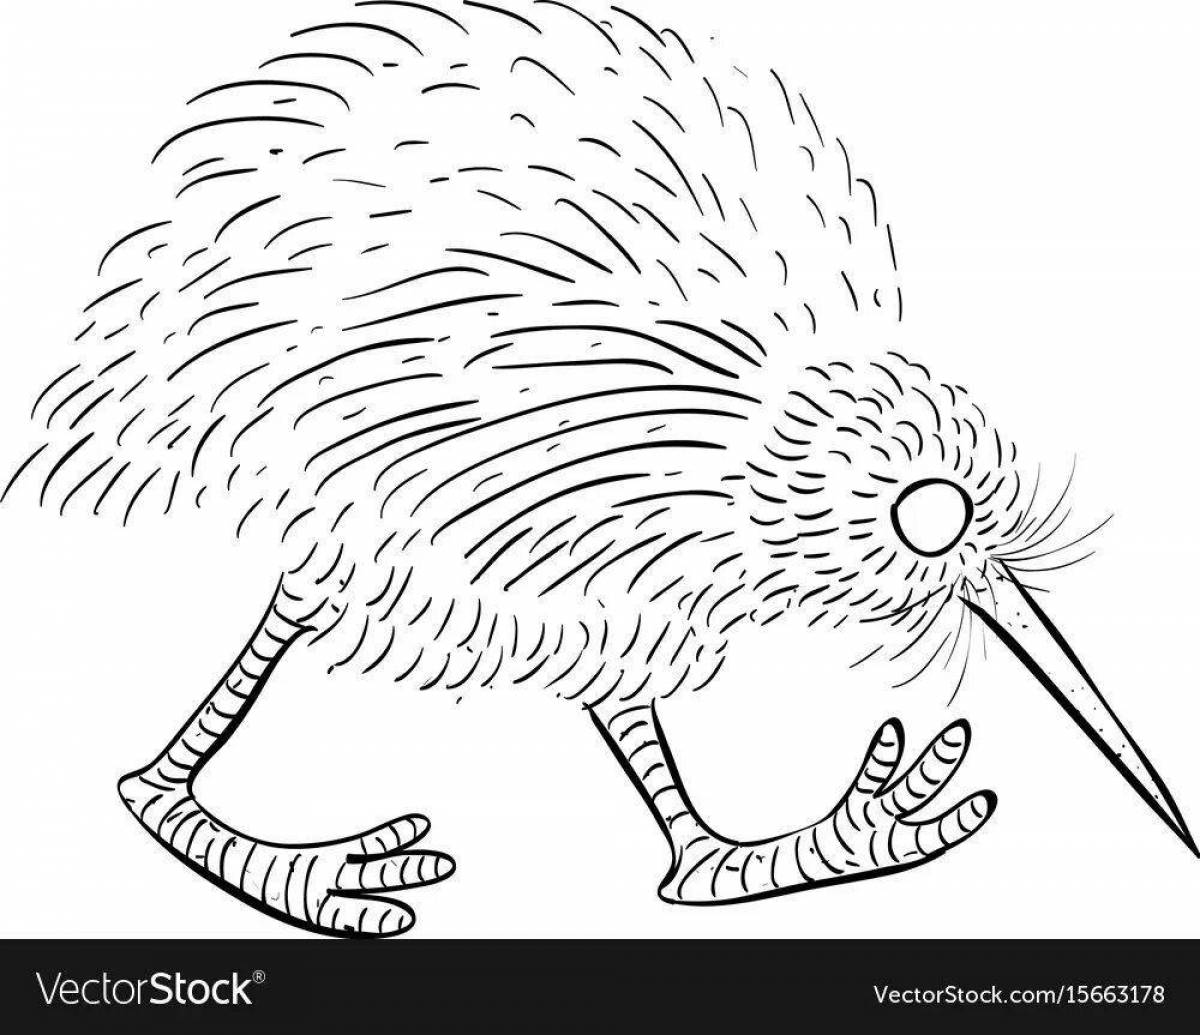 Colorful explosive kiwi bird coloring page